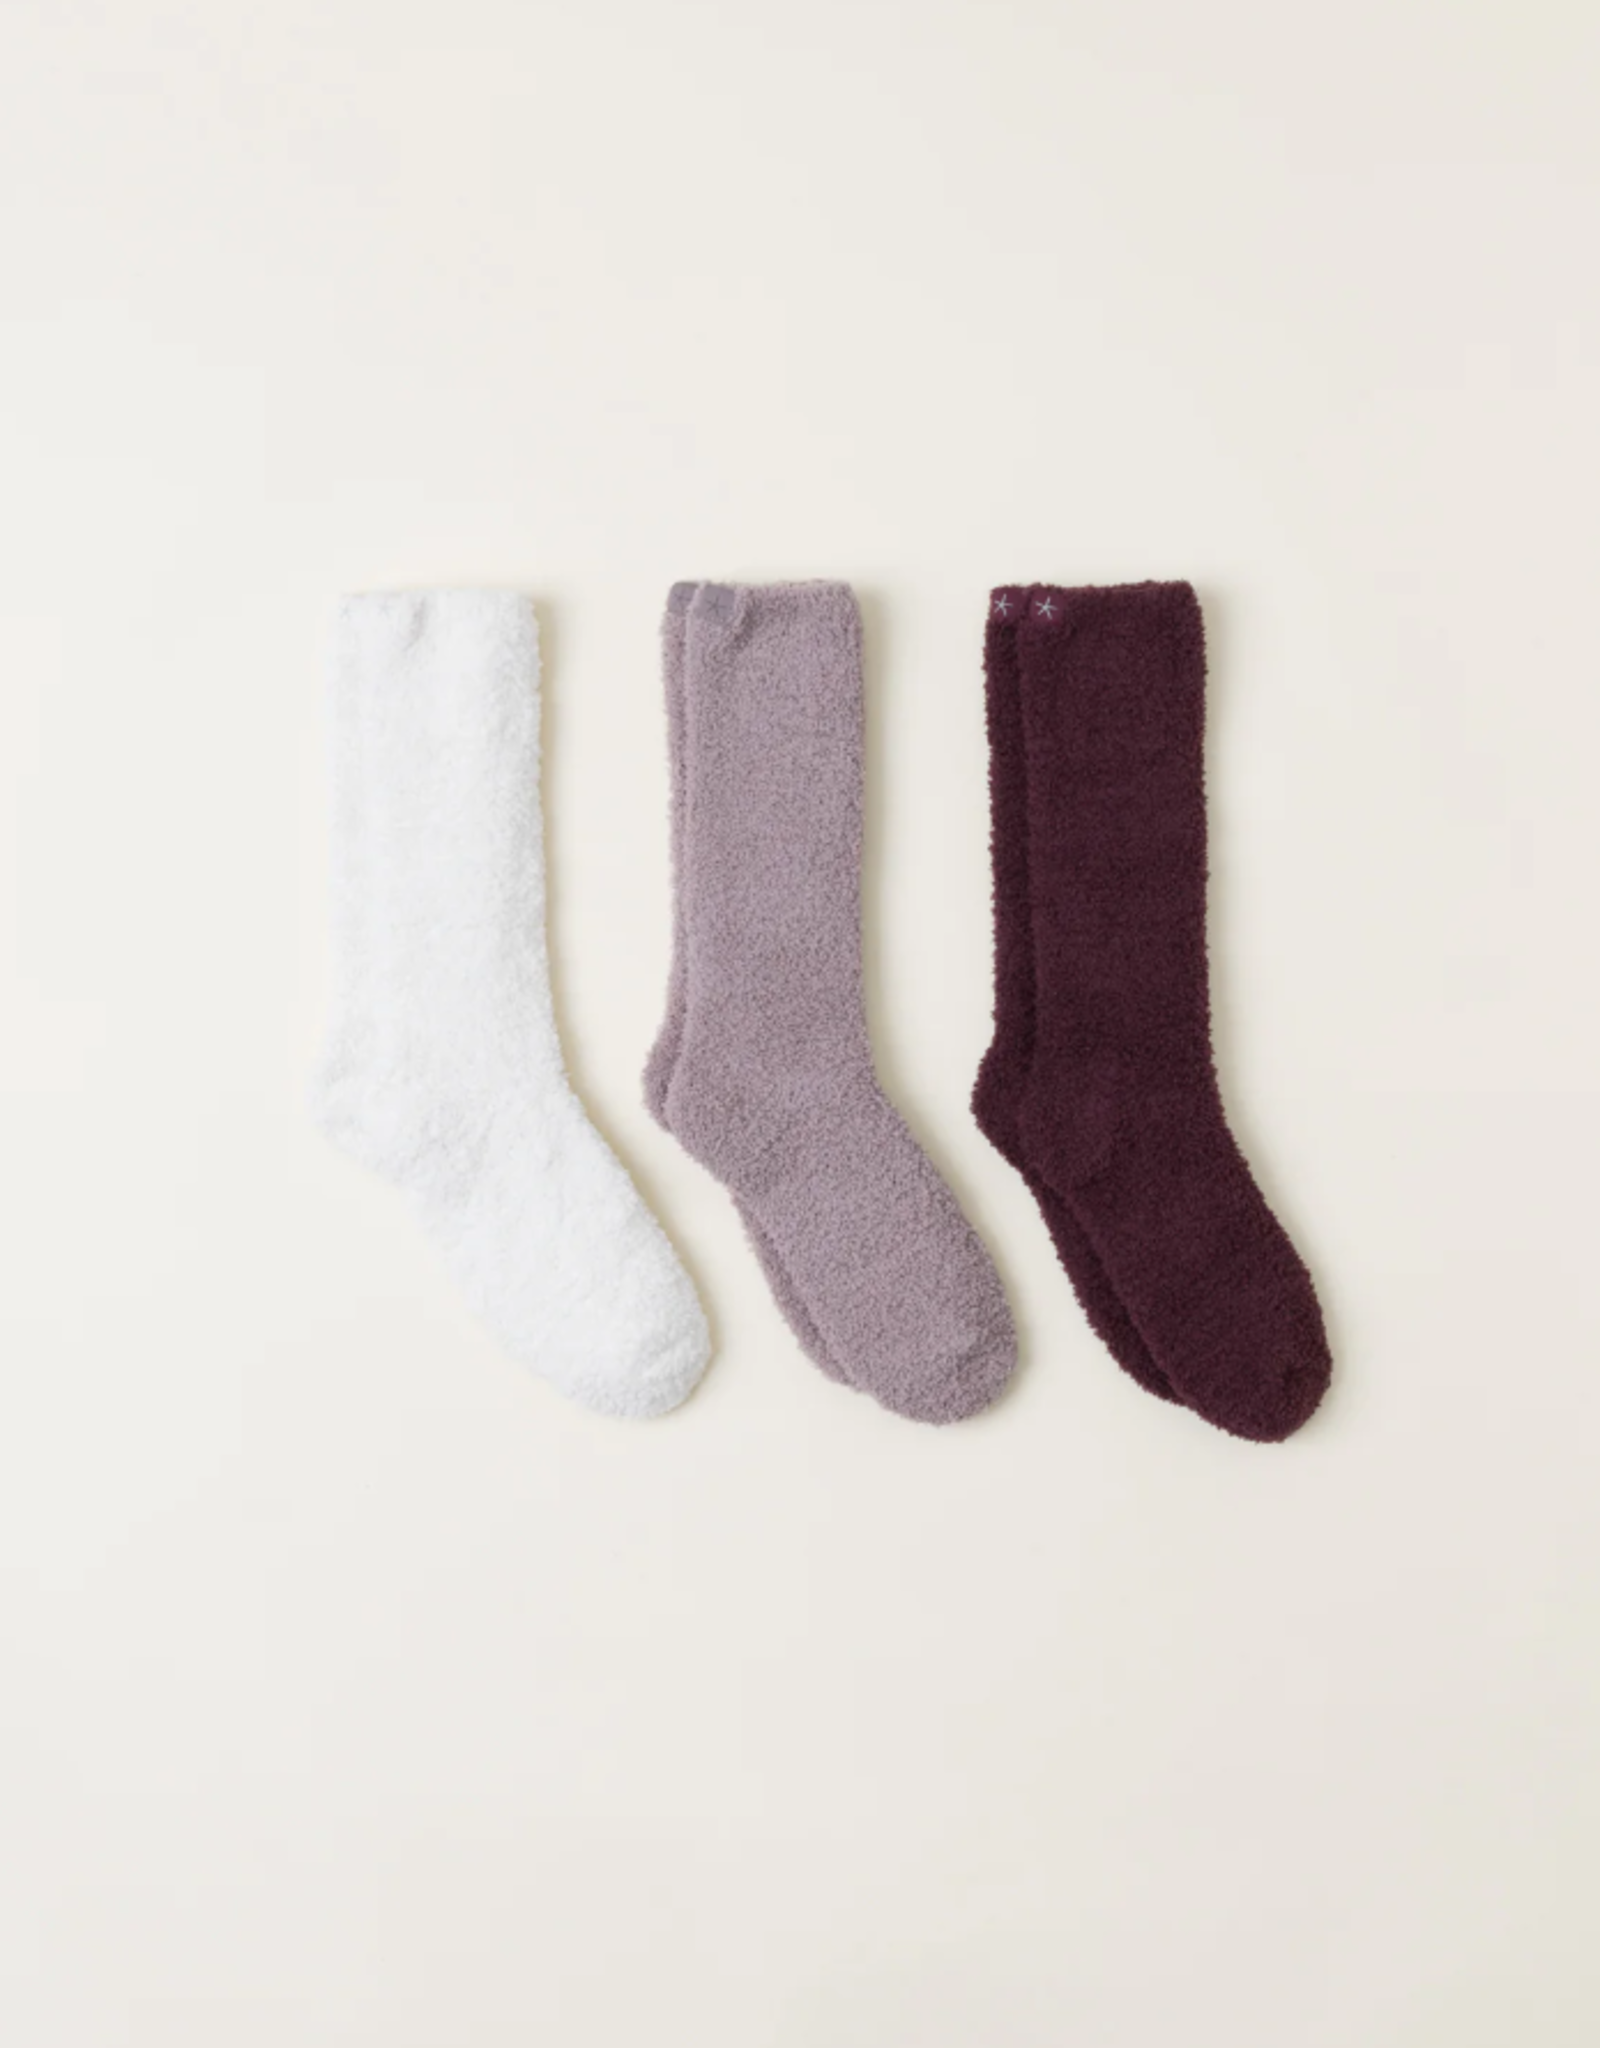 Barefoot Dreams CozyChic 3 Pair Sock Set